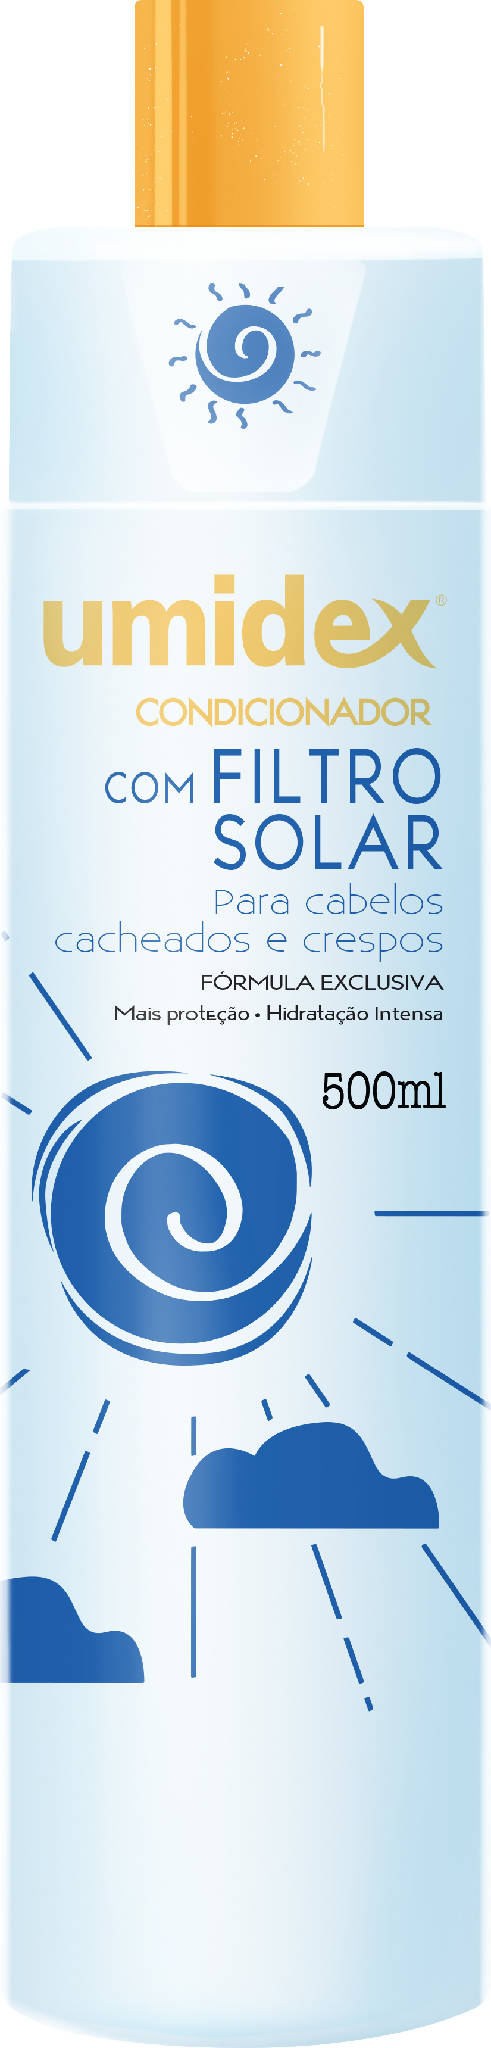 Condicionador Umidex Filtro Solar 500ml